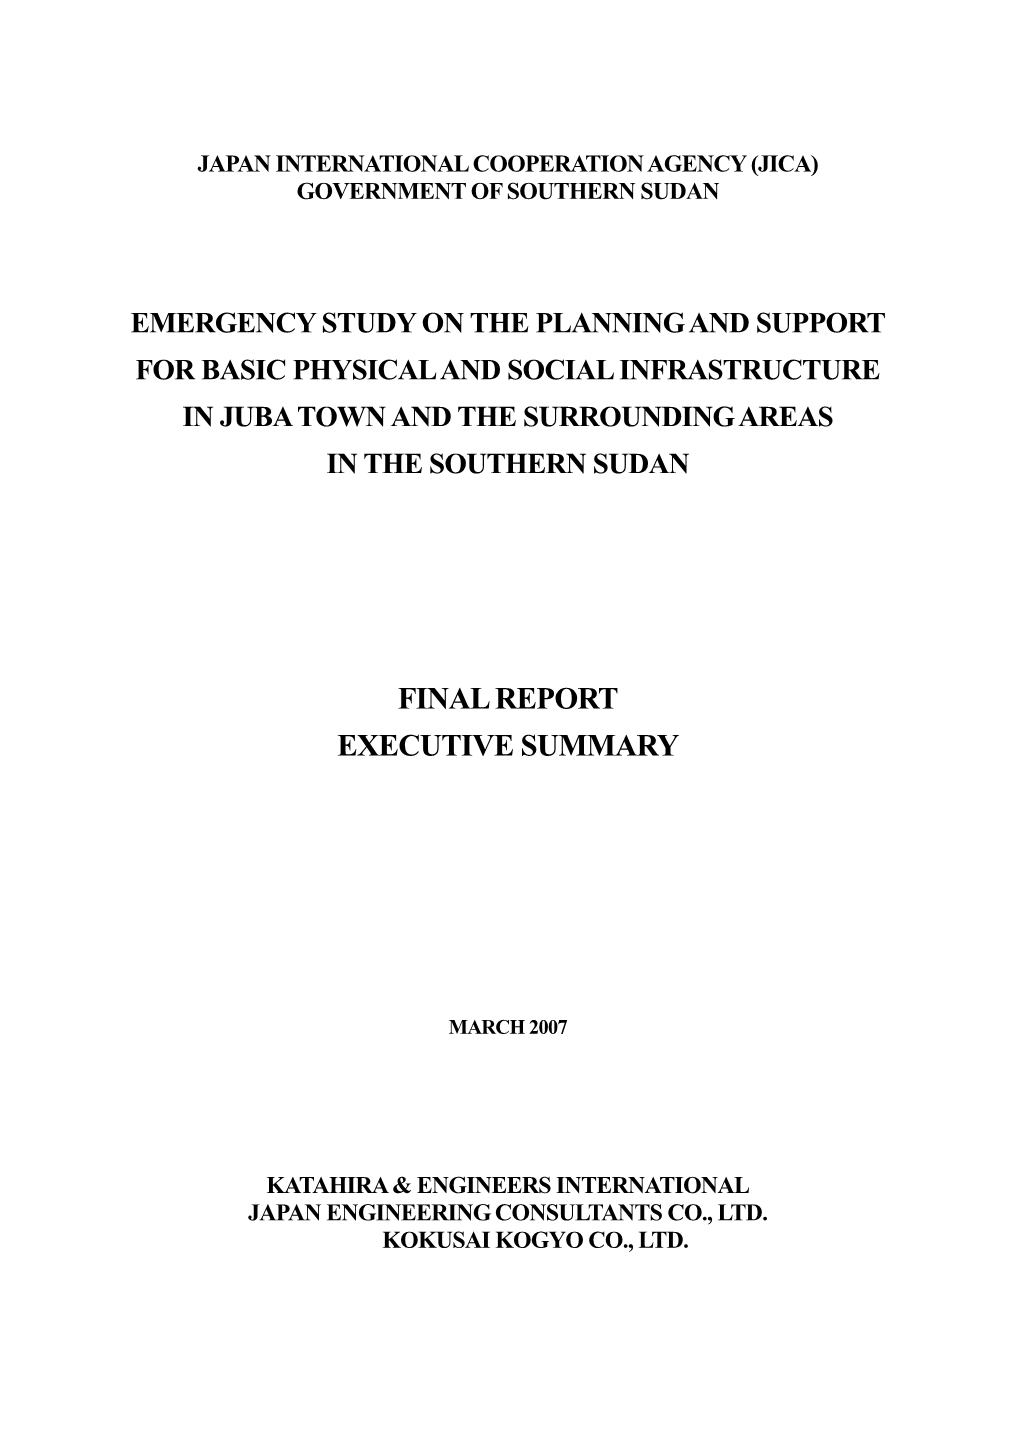 Final Report Executive Summary